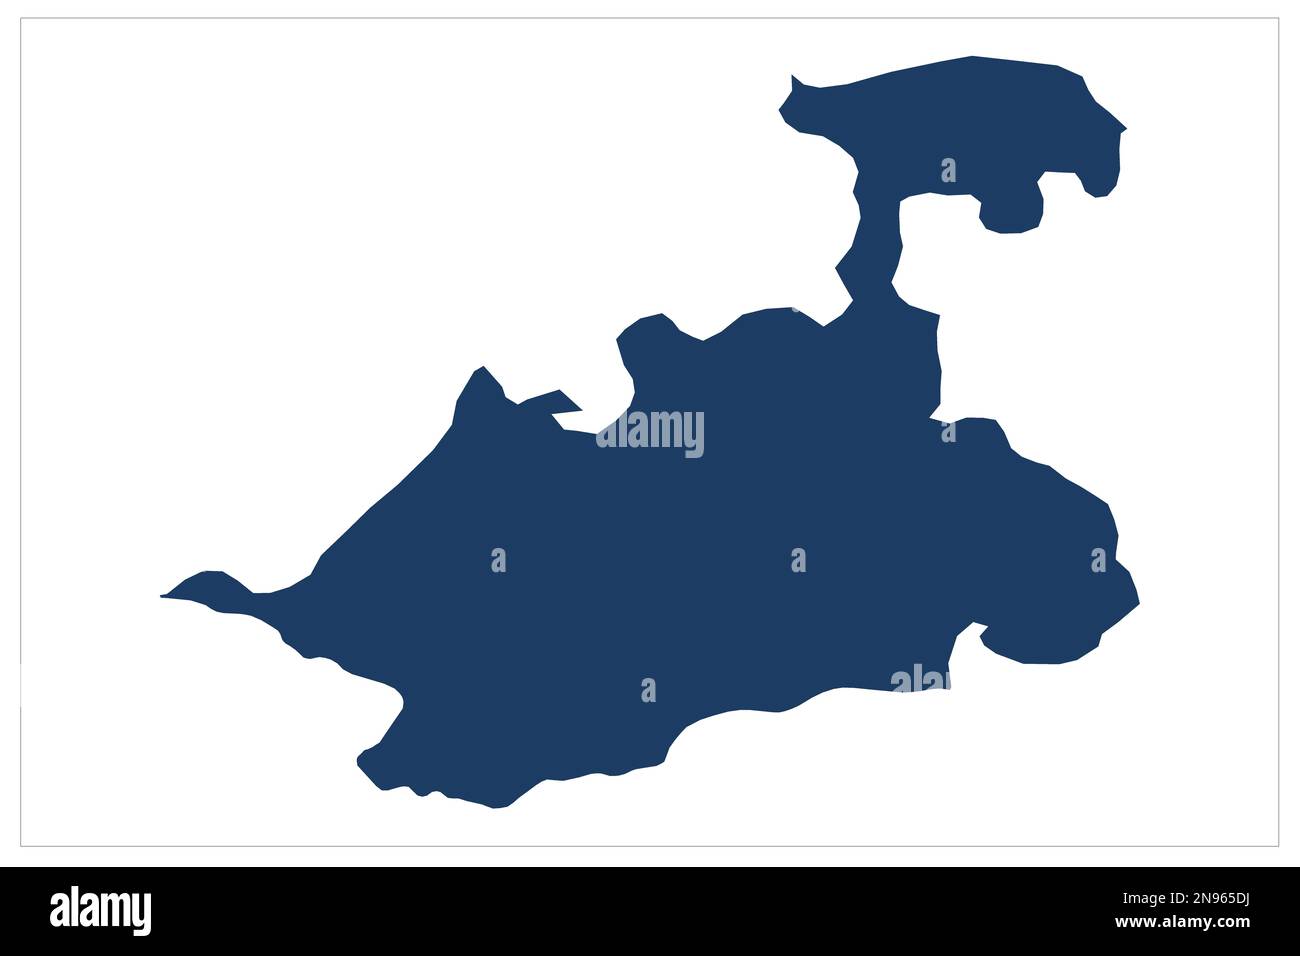 Kuzey Osetya, Republic of North Osetia-Alania , North Ossetia Russia State Province Map Illustration on white background using blue color Stock Photo